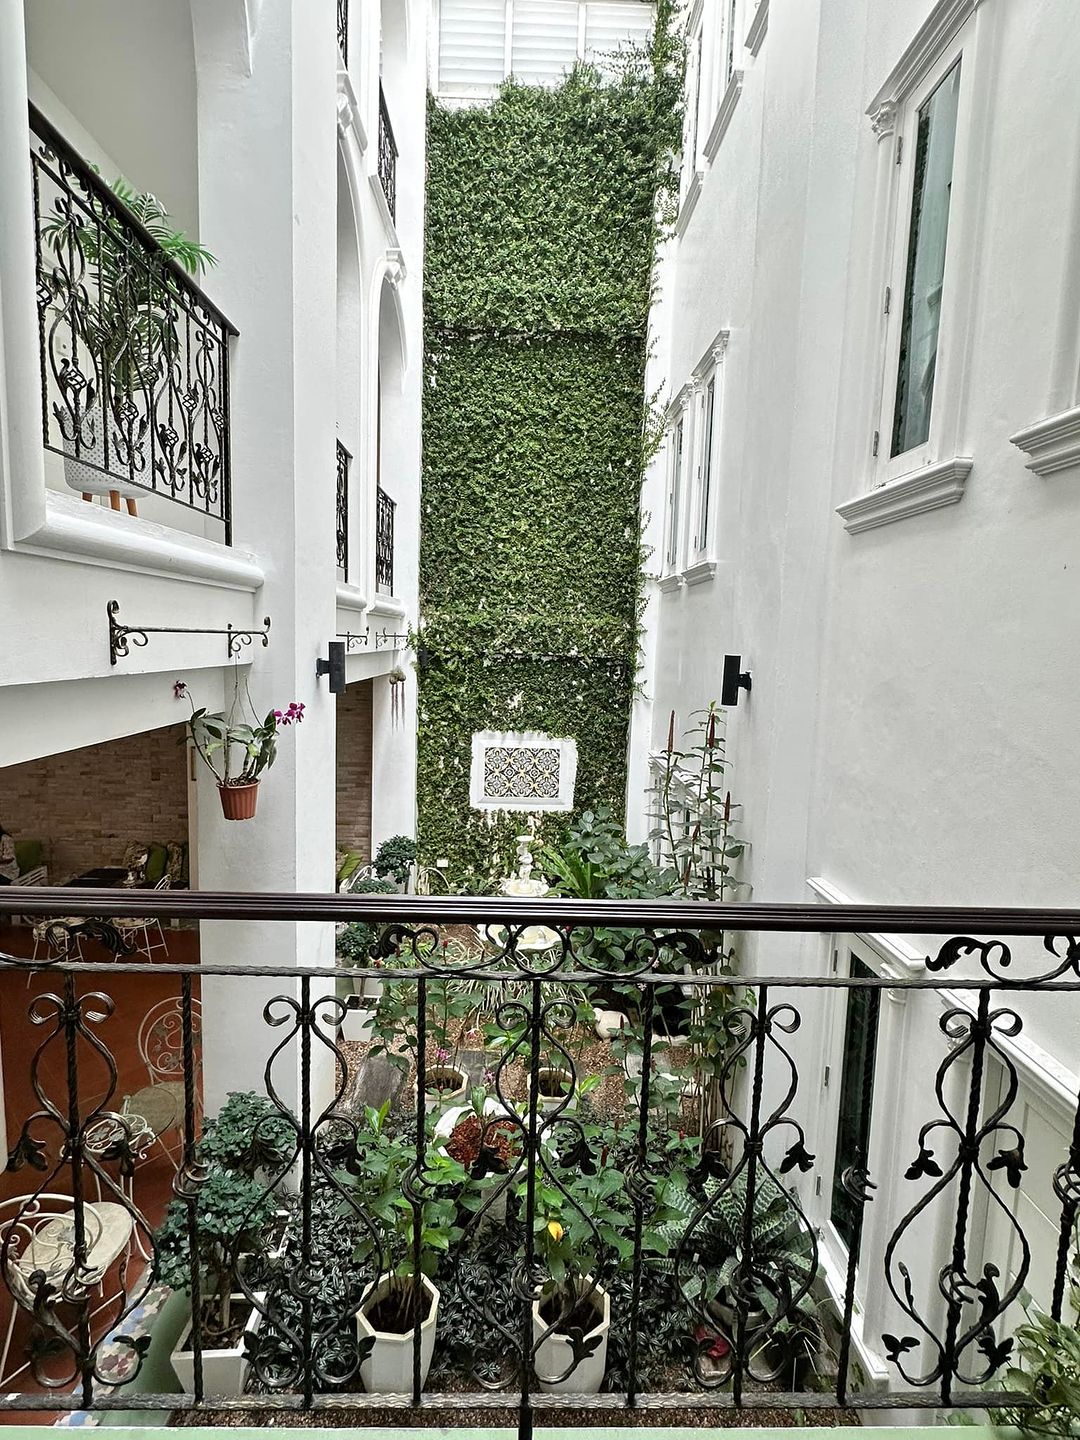 The garden view from a balcony inside the Casa Blanca Boutique Hotel